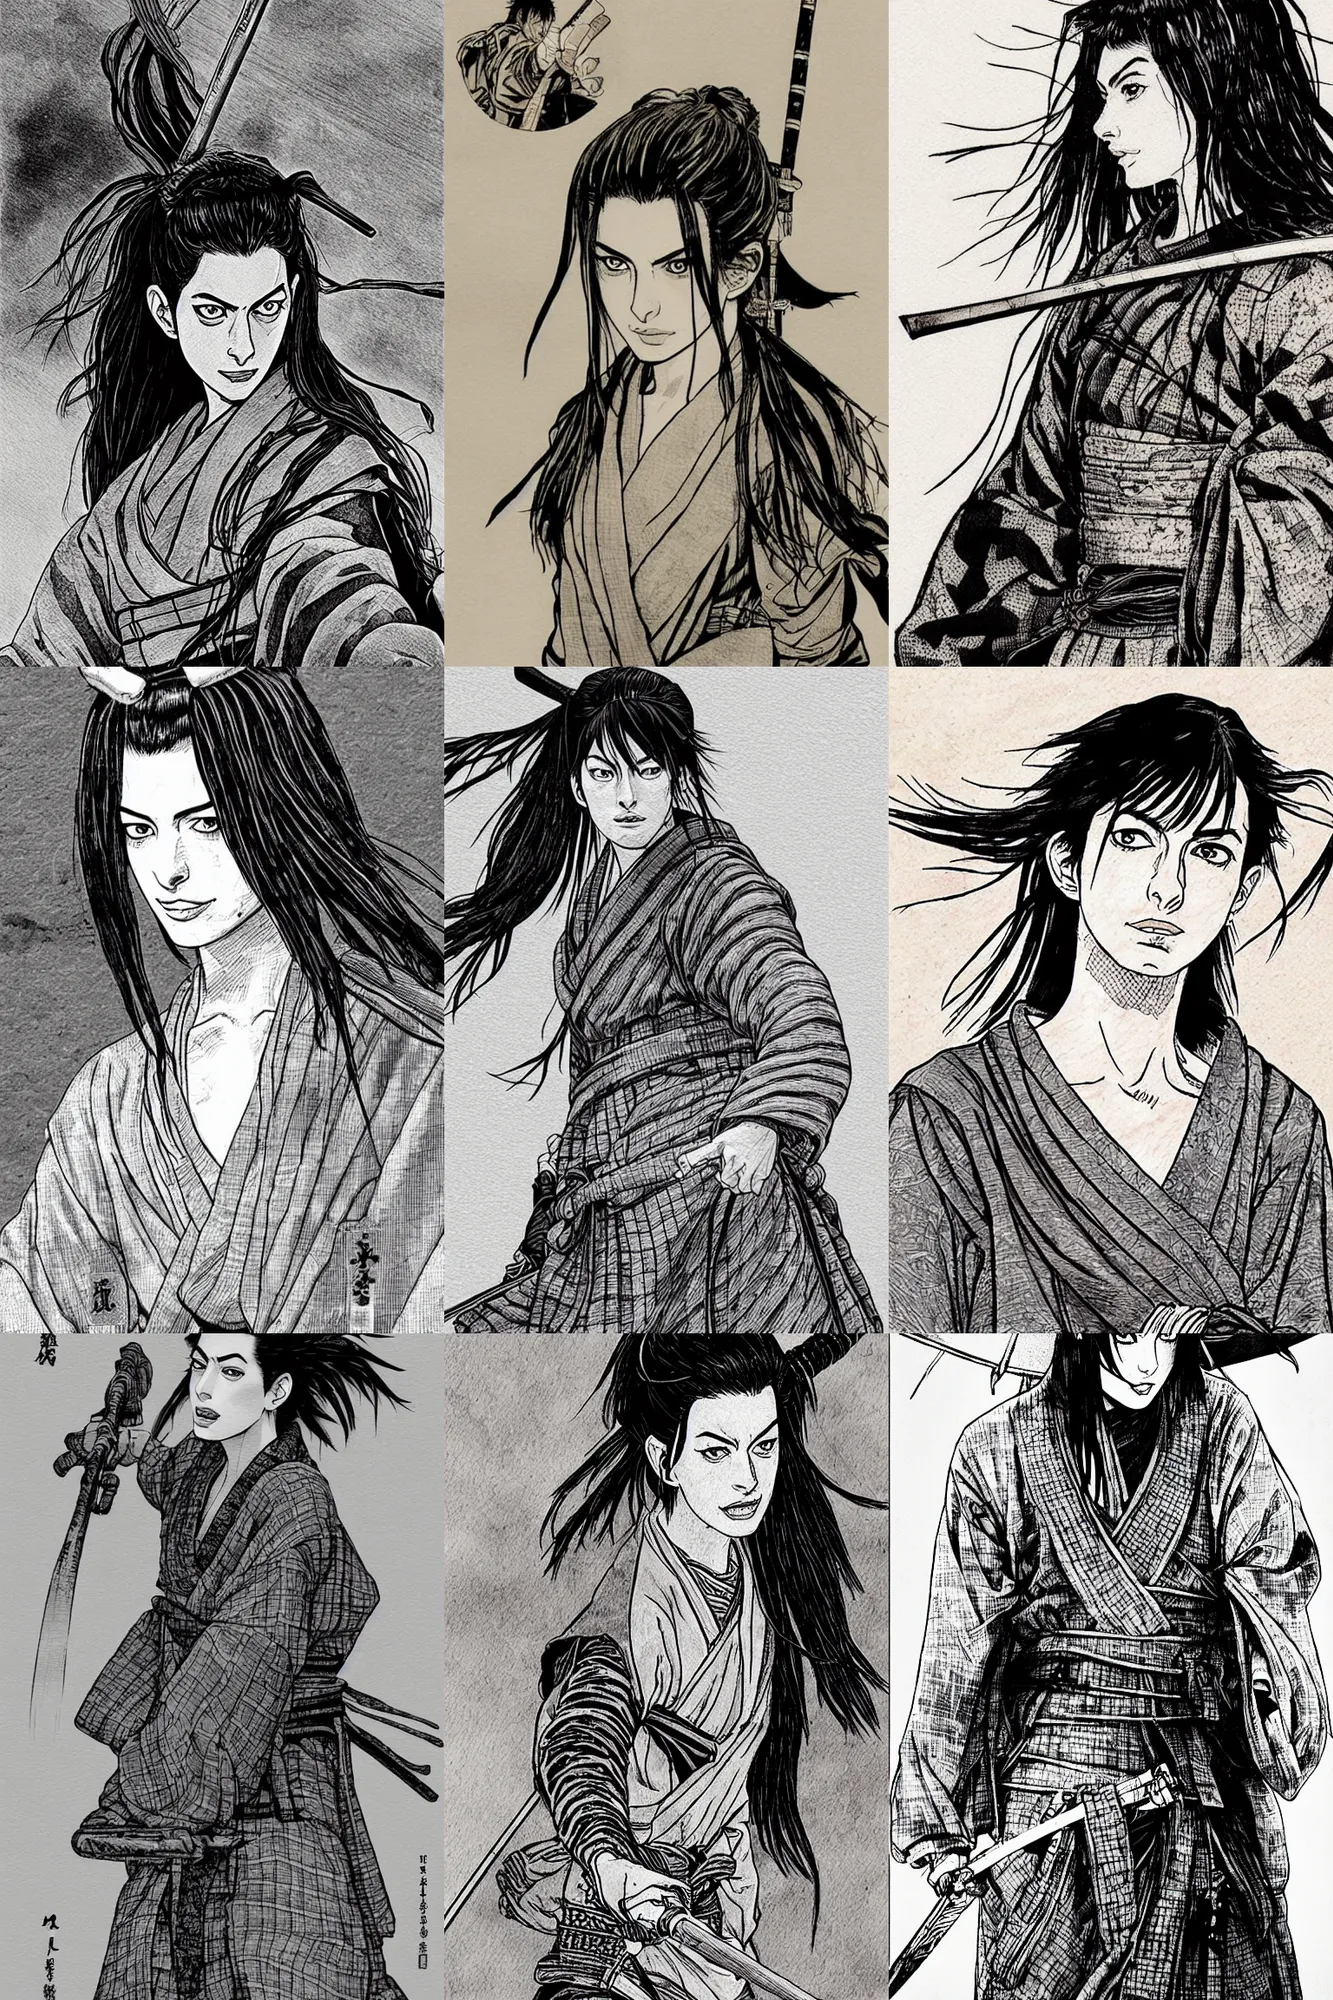 Prompt: detailed anne hathaway as a samurai in vagabond manga by takehiko inoue, black ink